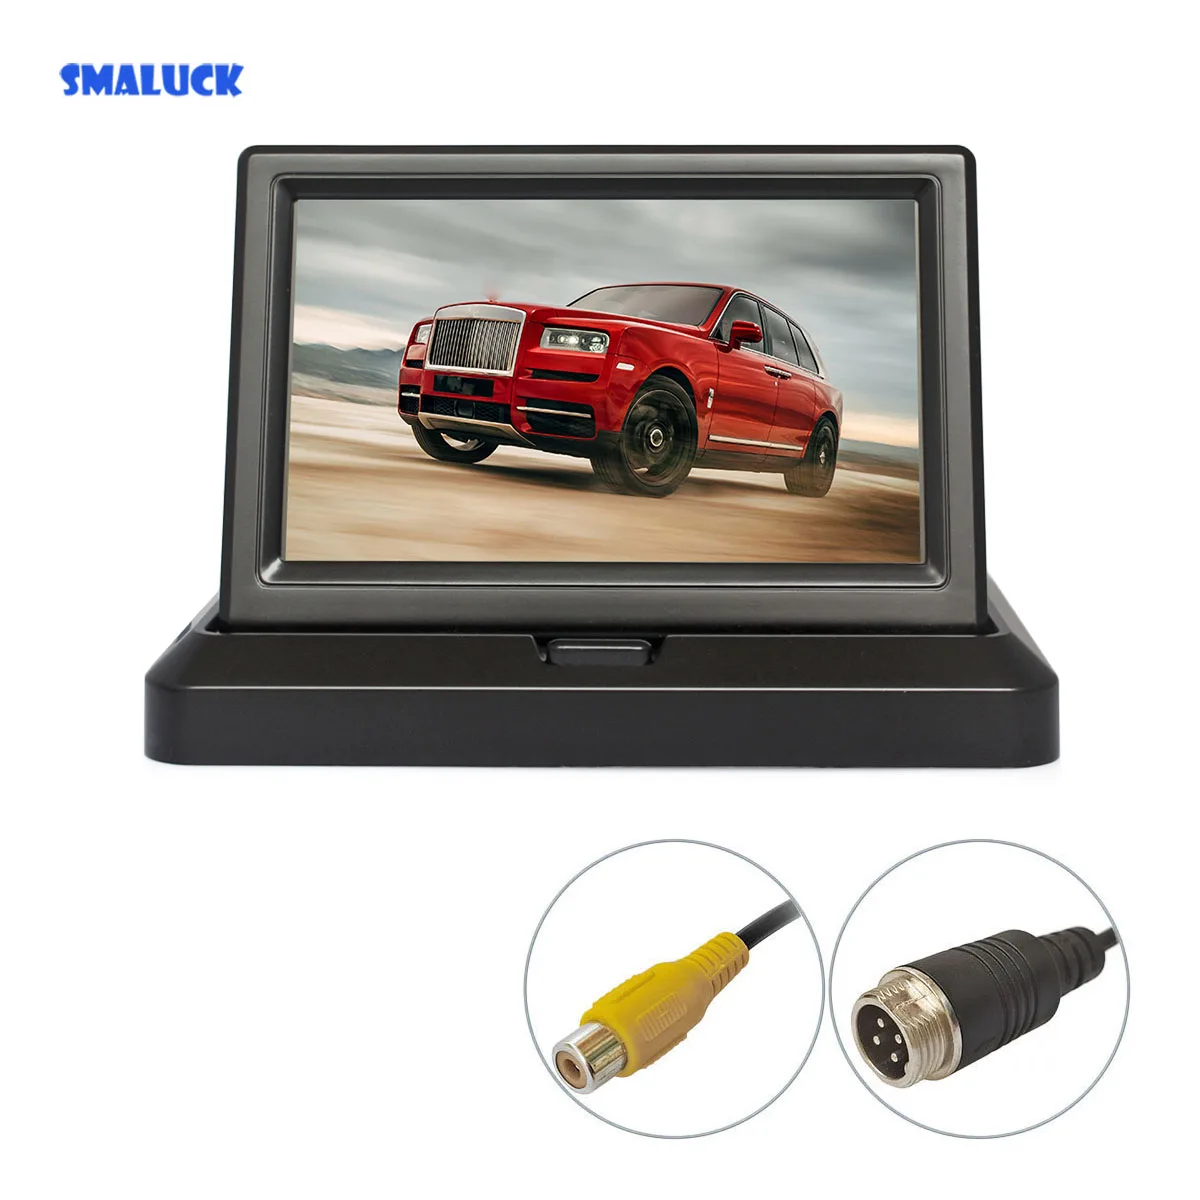 

SMALUCK 5" Foldable TFT LCD Monitor Car Reverse Rear View Car Monitor for Camera DVD VCR